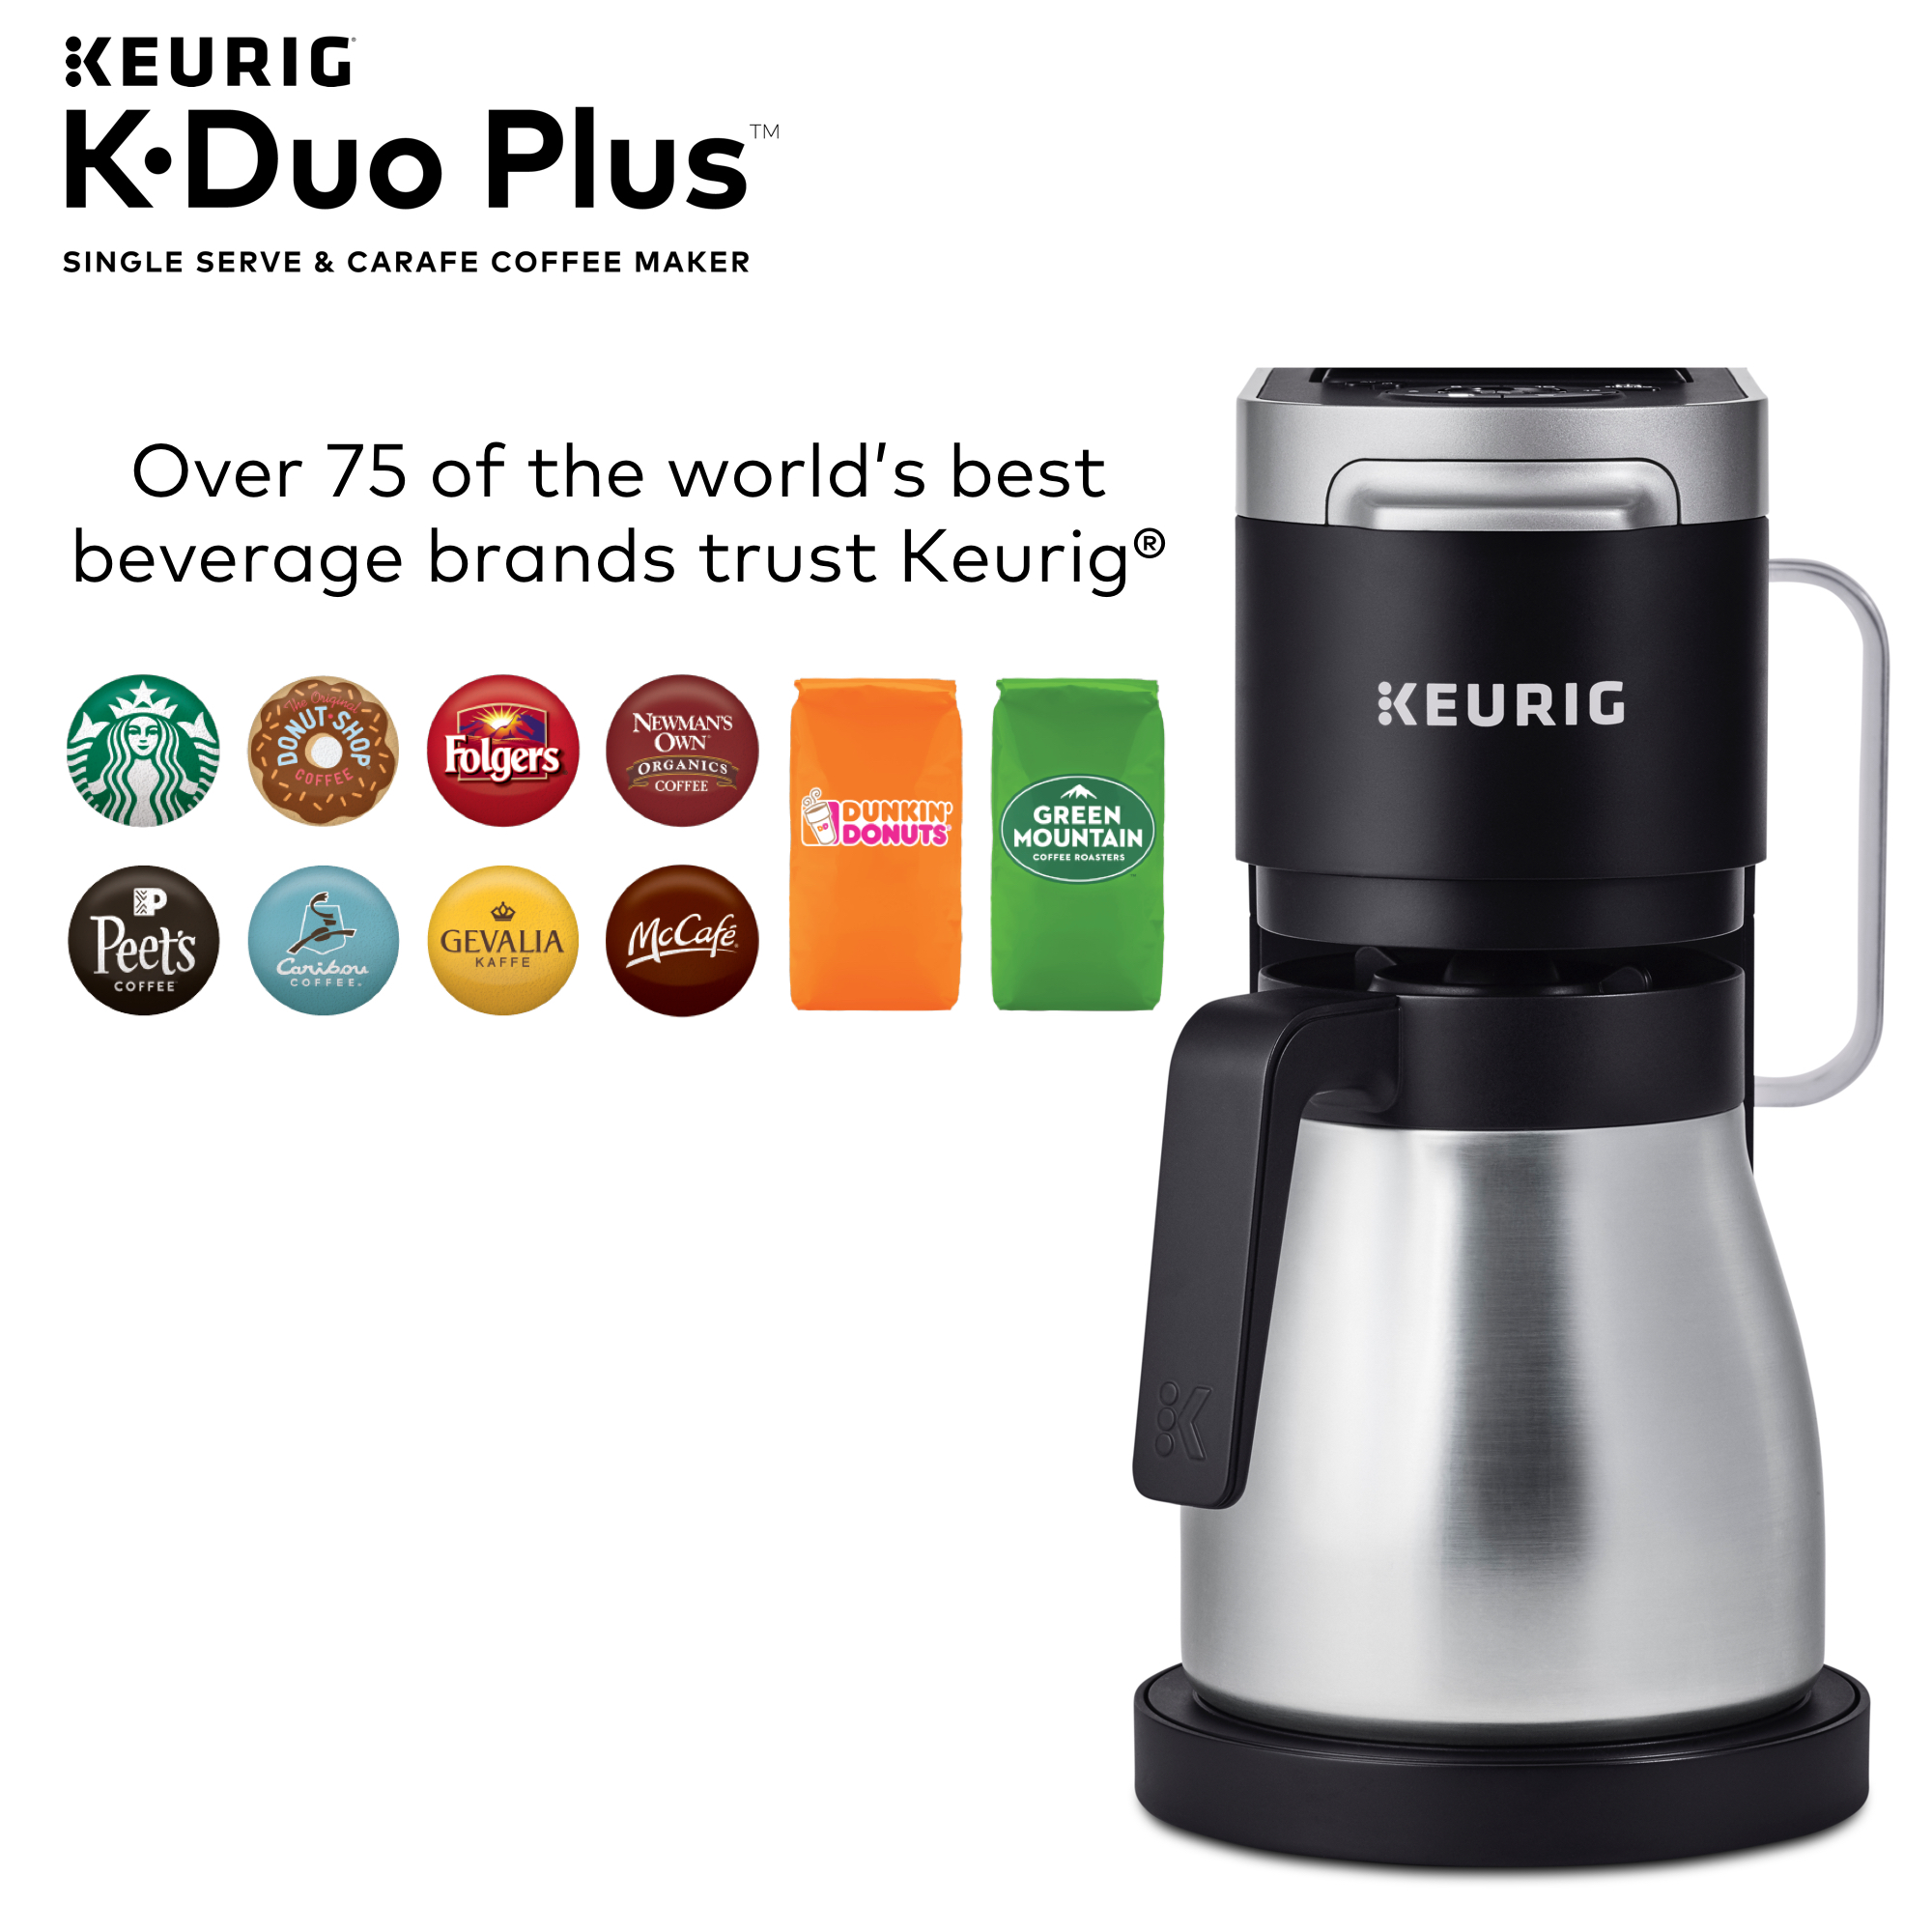 Keurig K-Duo Plus Single Serve & Carafe Coffee Maker - image 5 of 24